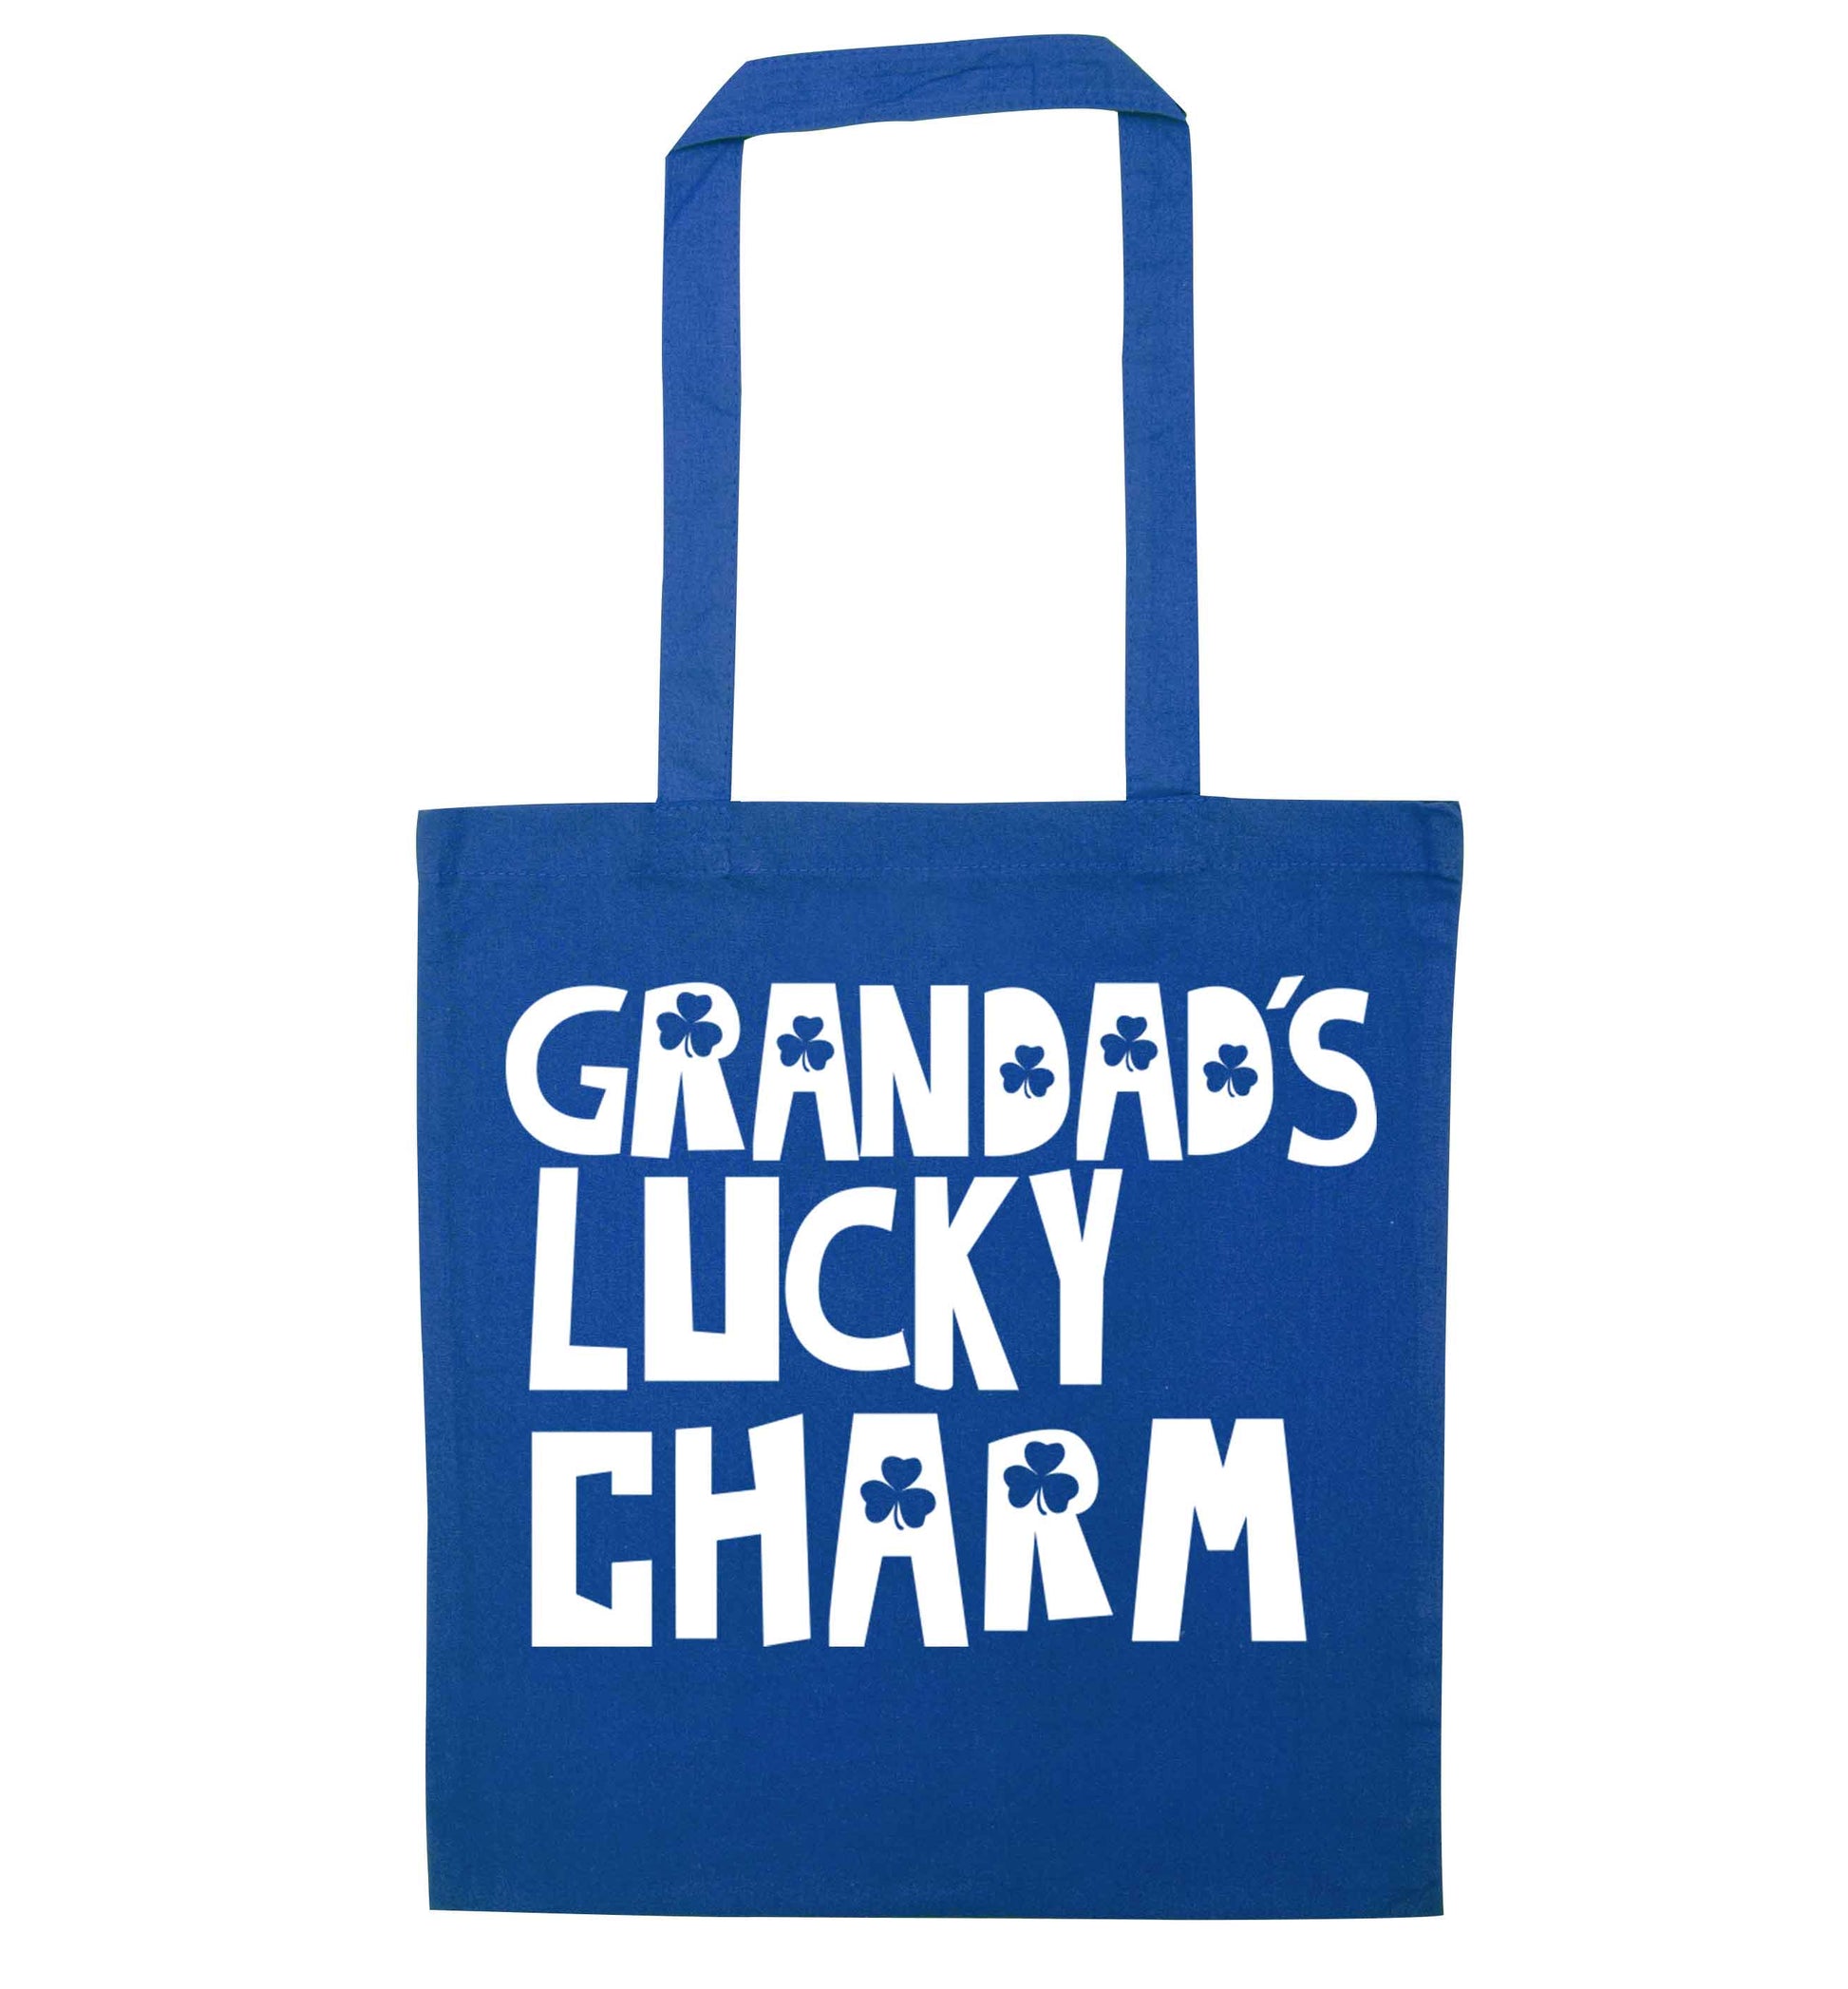 Grandad's lucky charm  blue tote bag